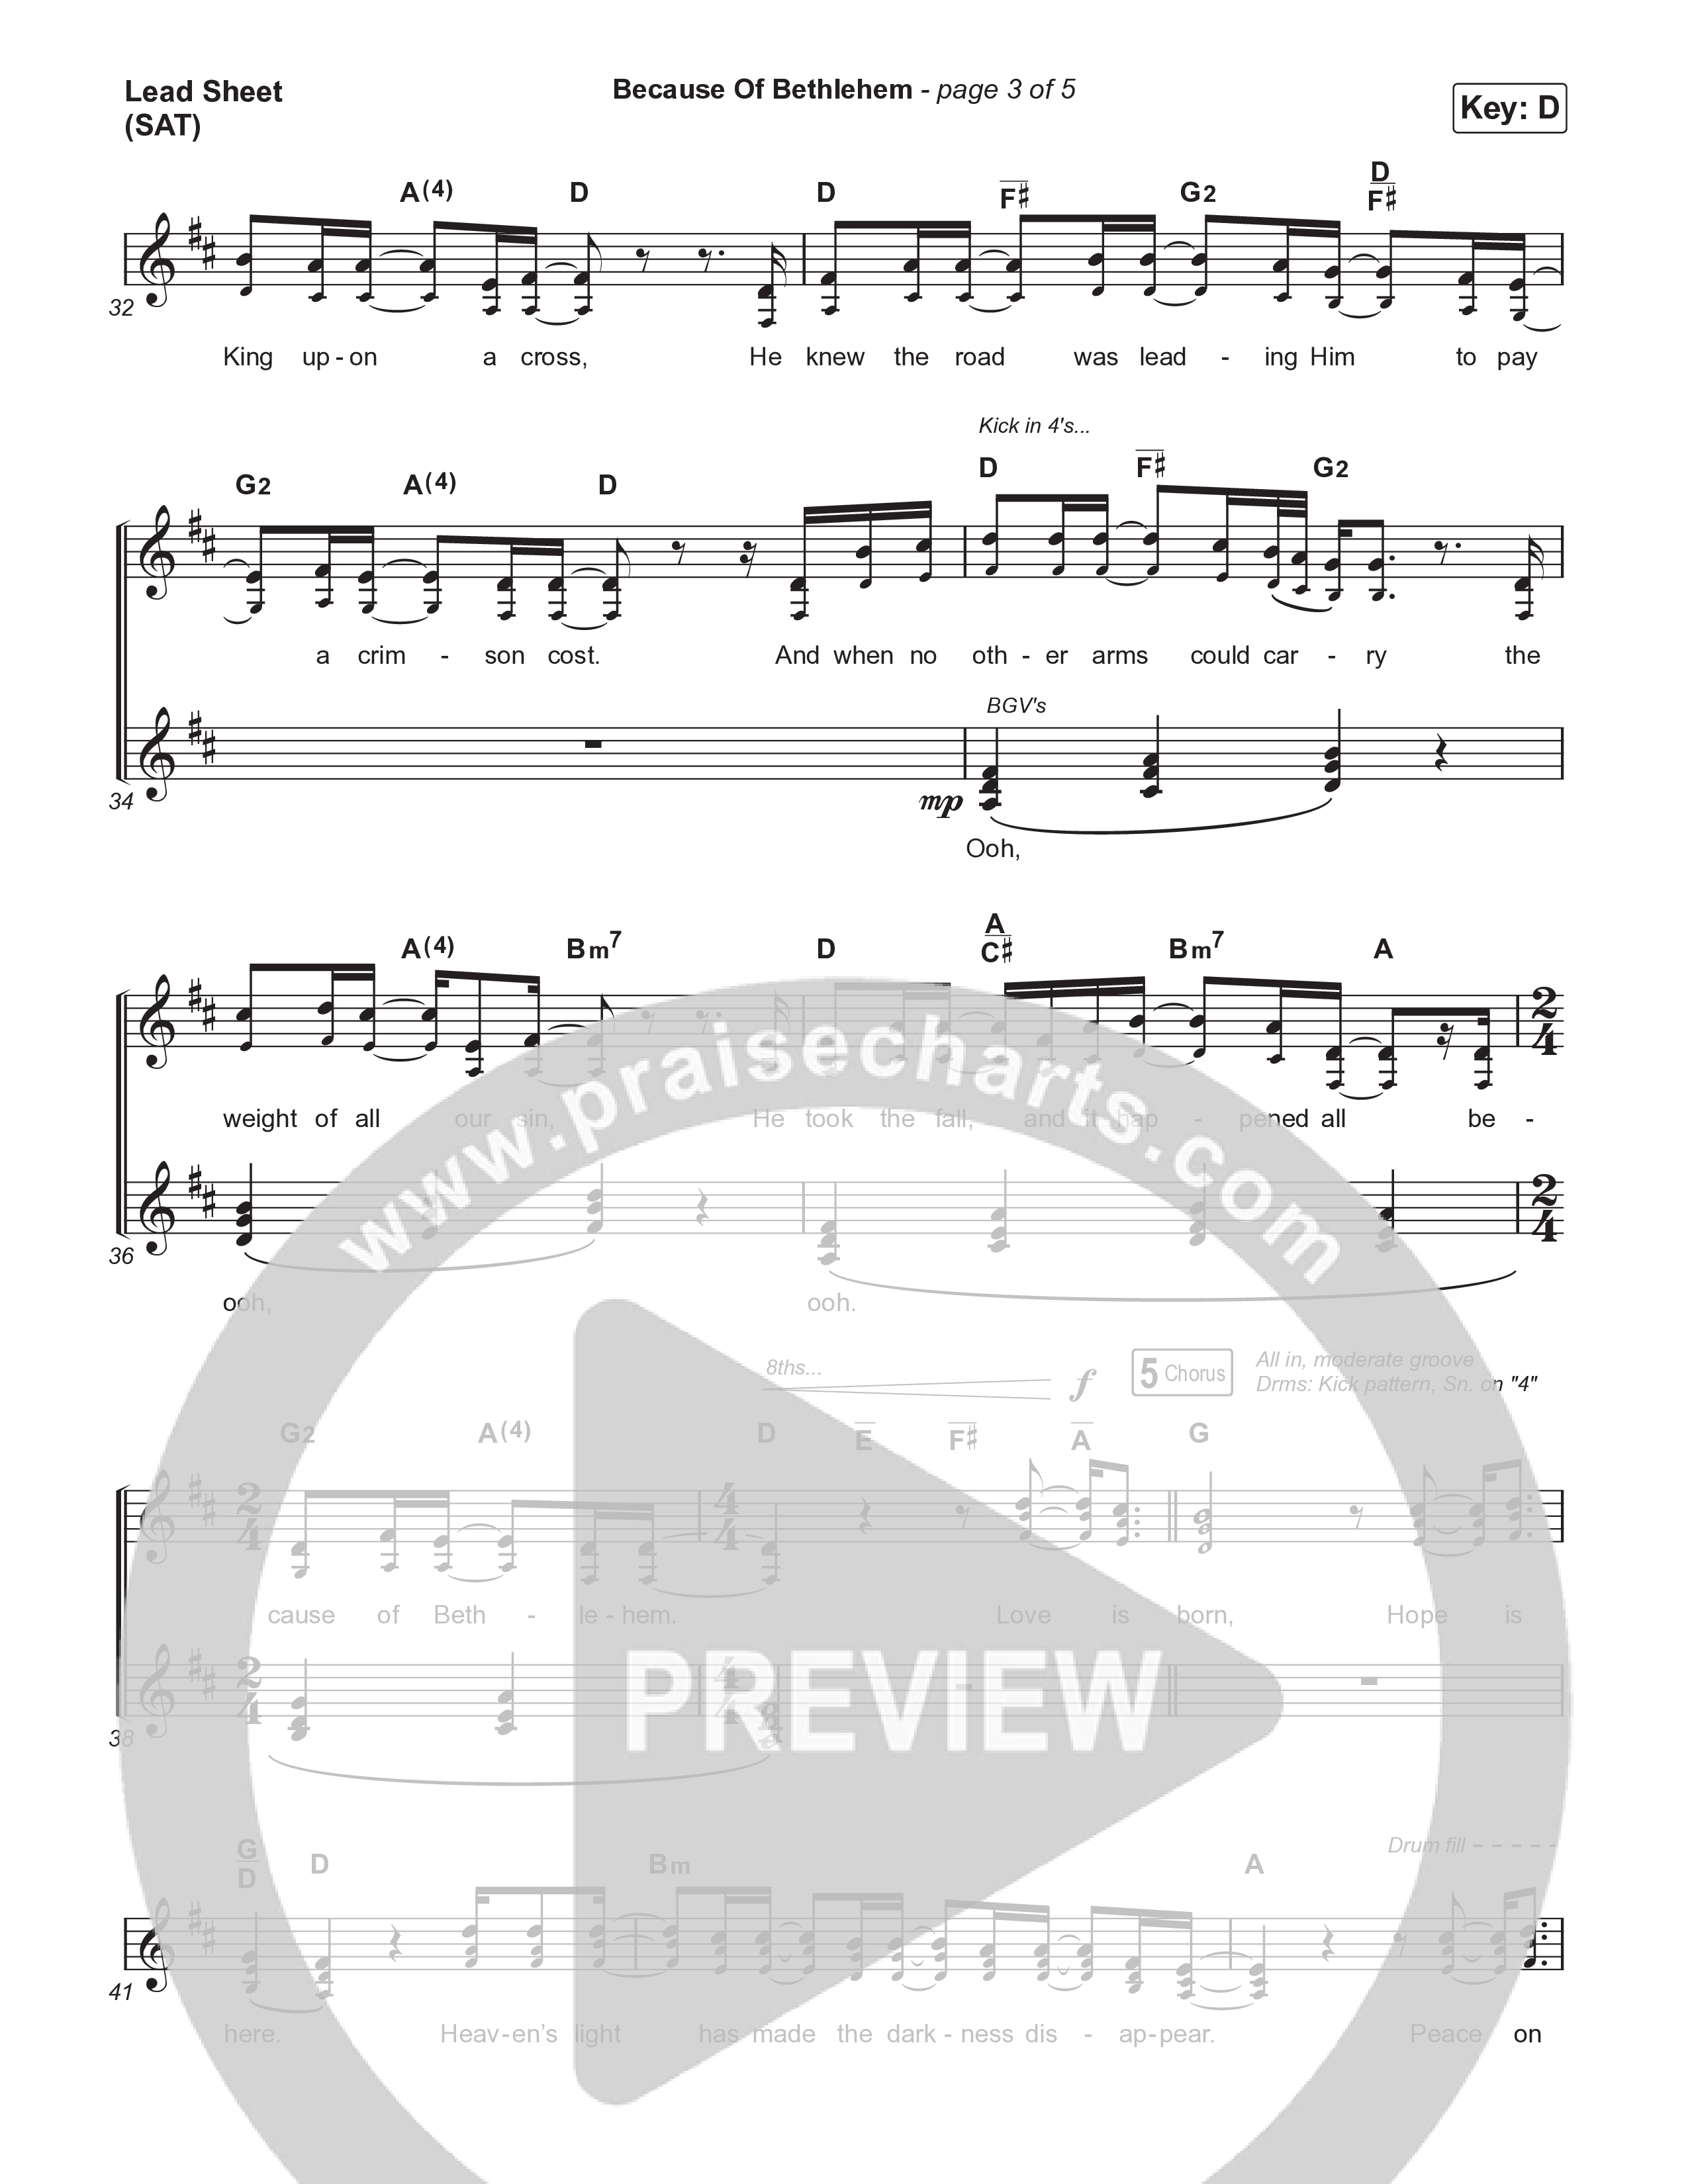 Because Of Bethlehem (Choral Anthem SATB) Lead Sheet (SAT) (Matthew West / Arr. Luke Gambill)